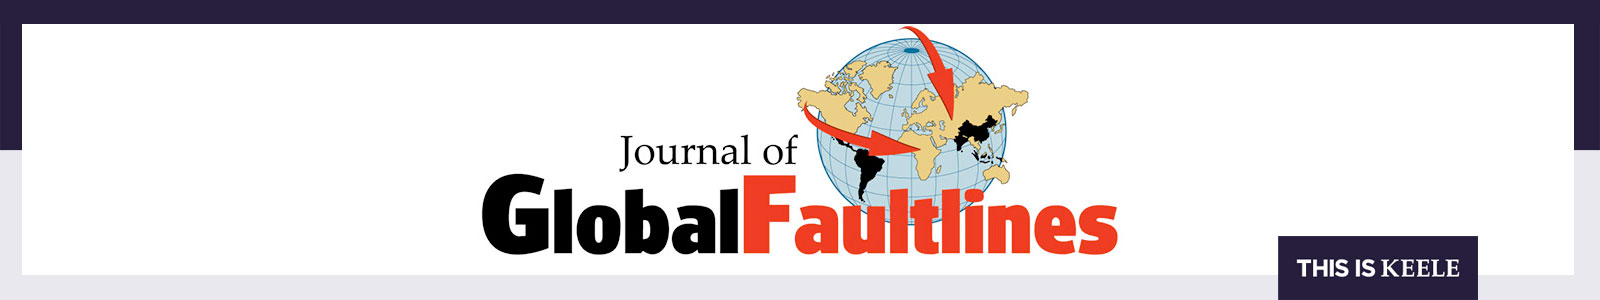 Journal of Global Faultlines banner